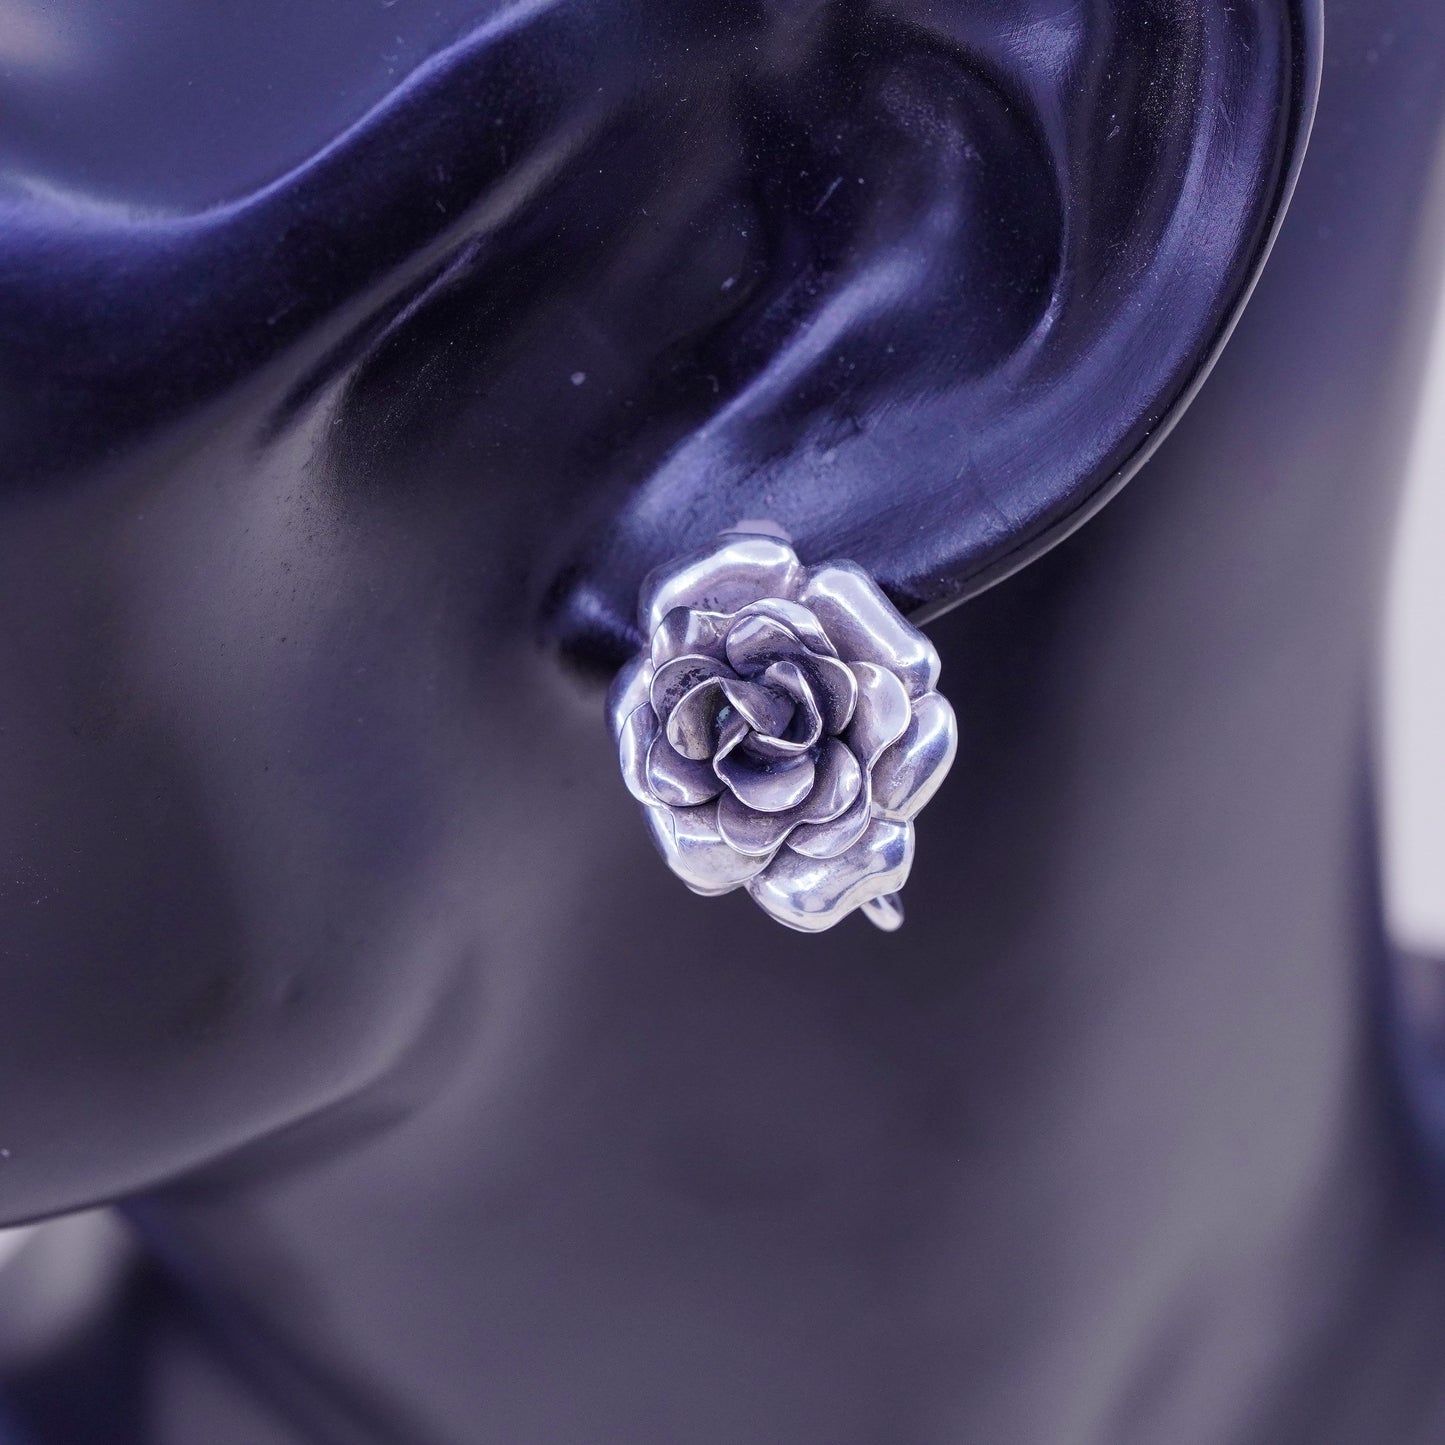 Vintage danecraft Sterling silver earrings, 925 screw back flower rose earrings